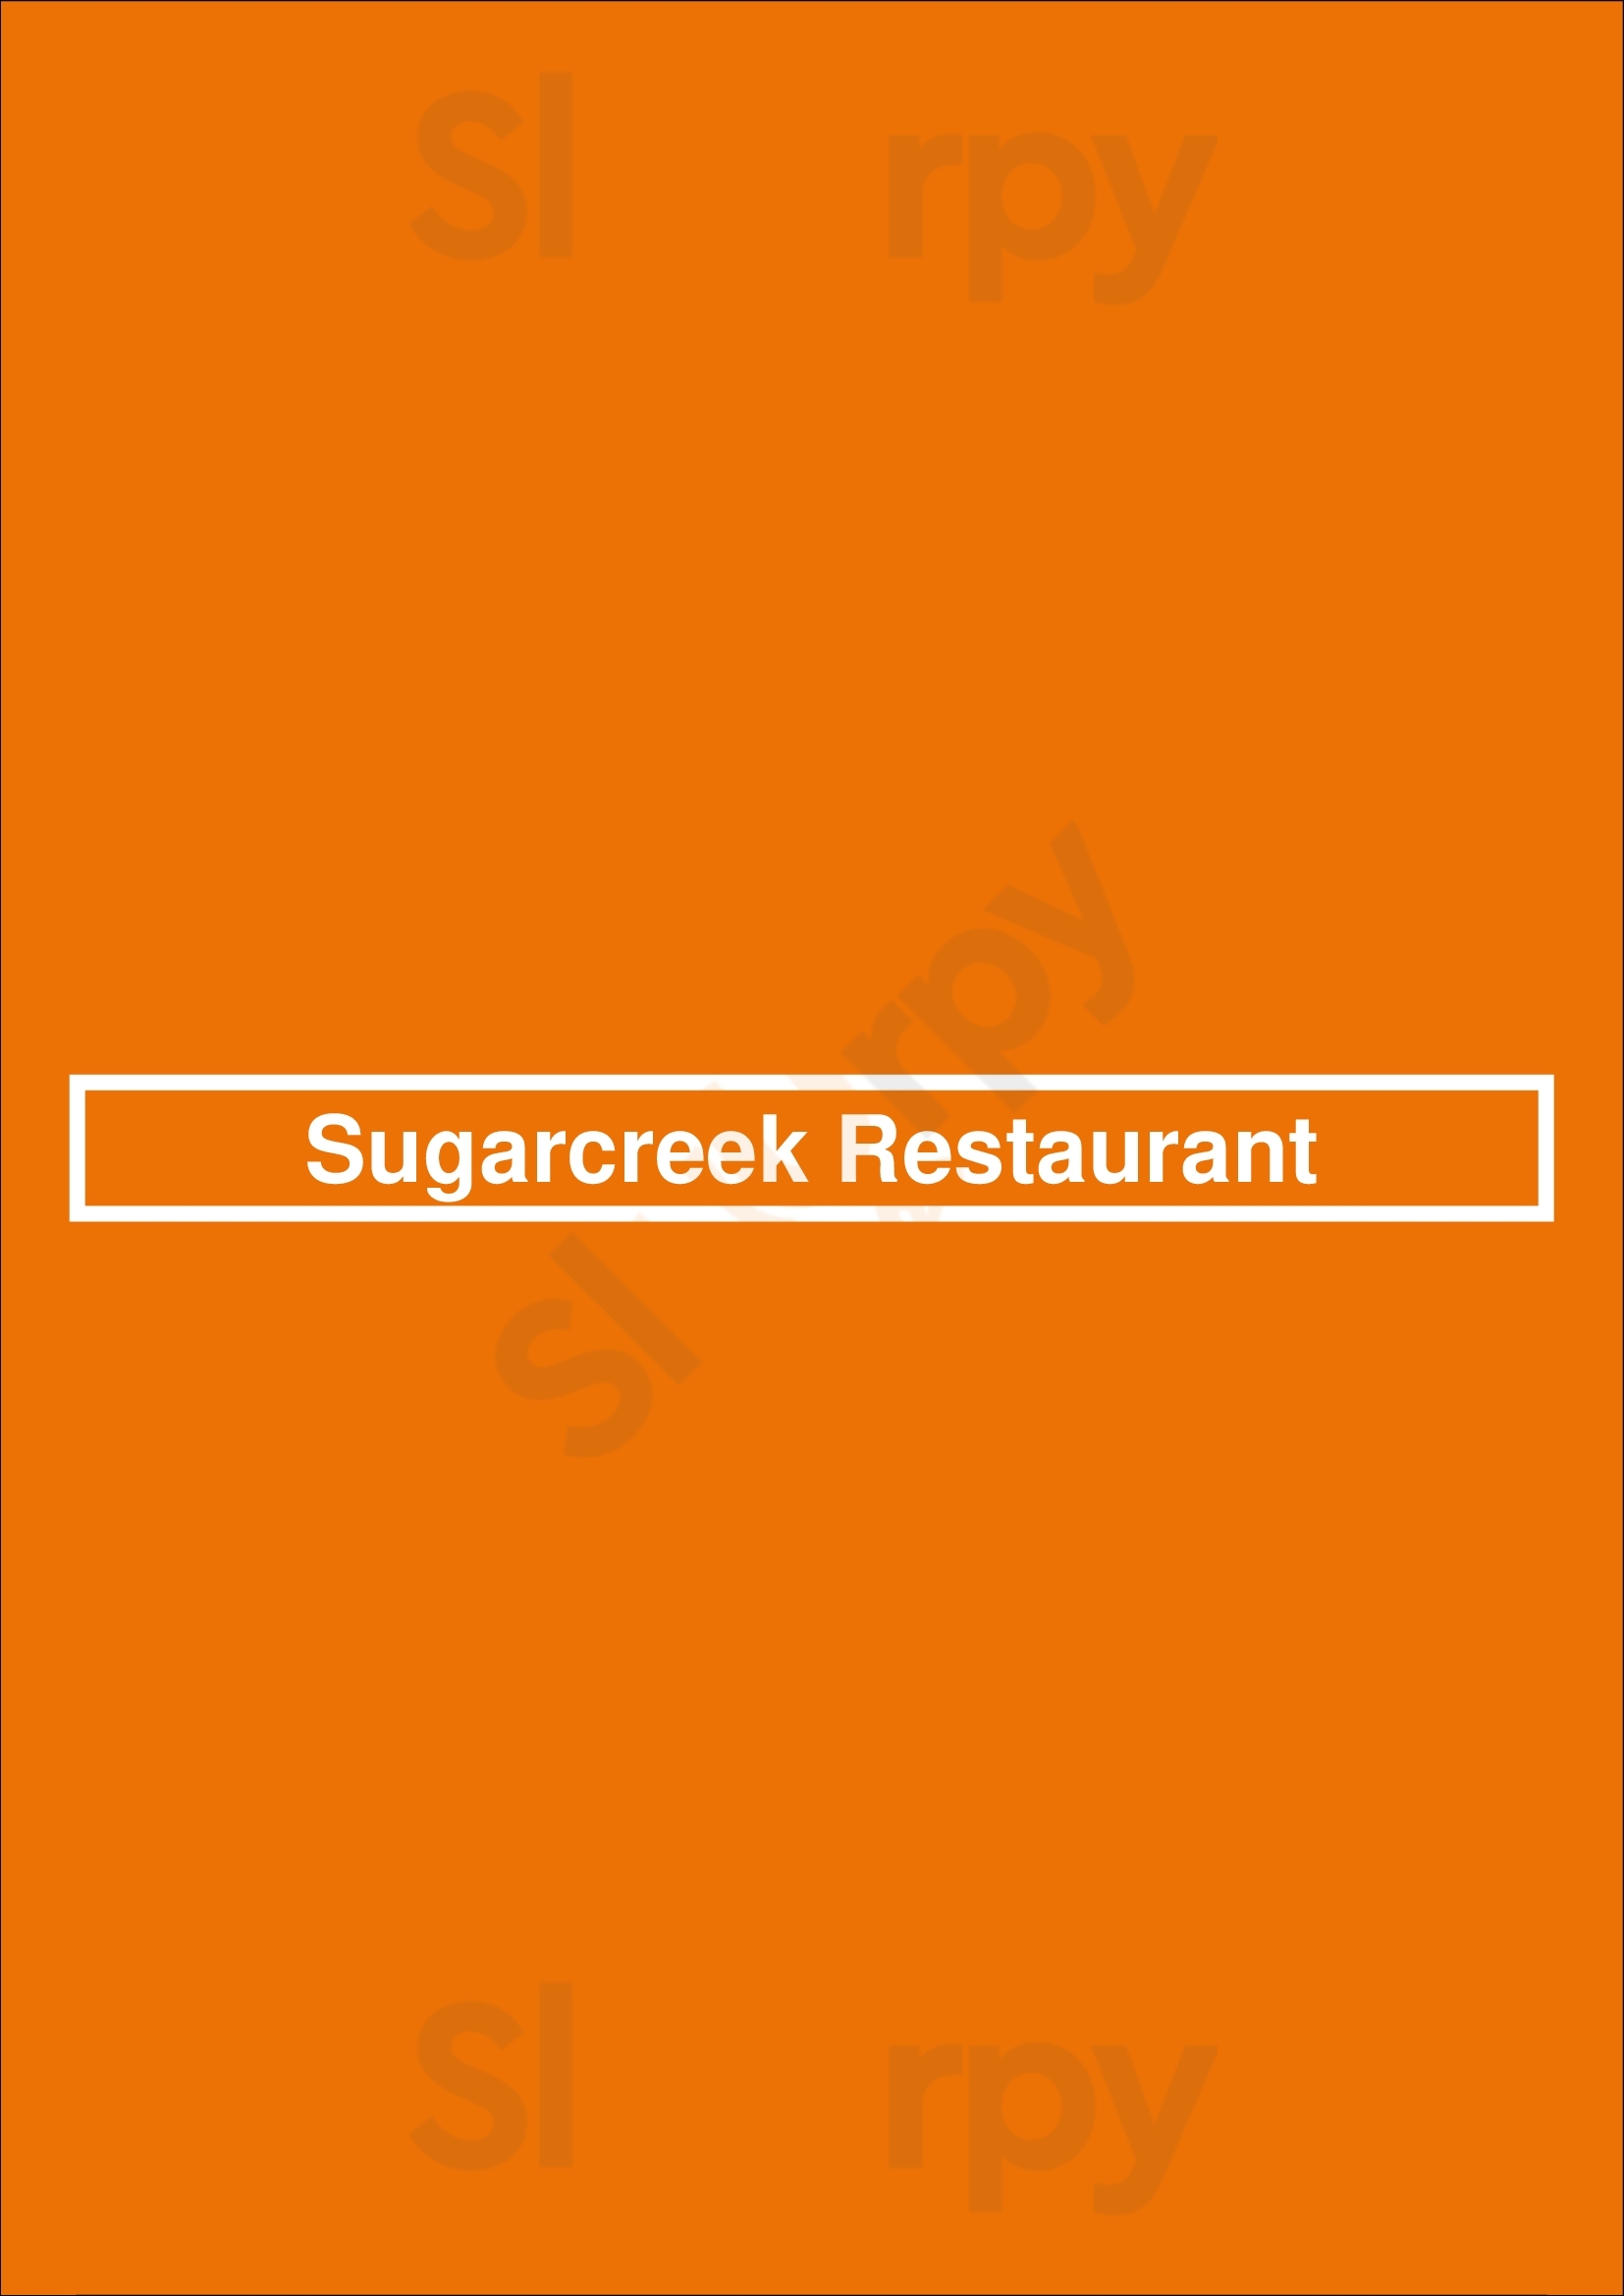 Sugarcreek Restaurant Gainesville Menu - 1